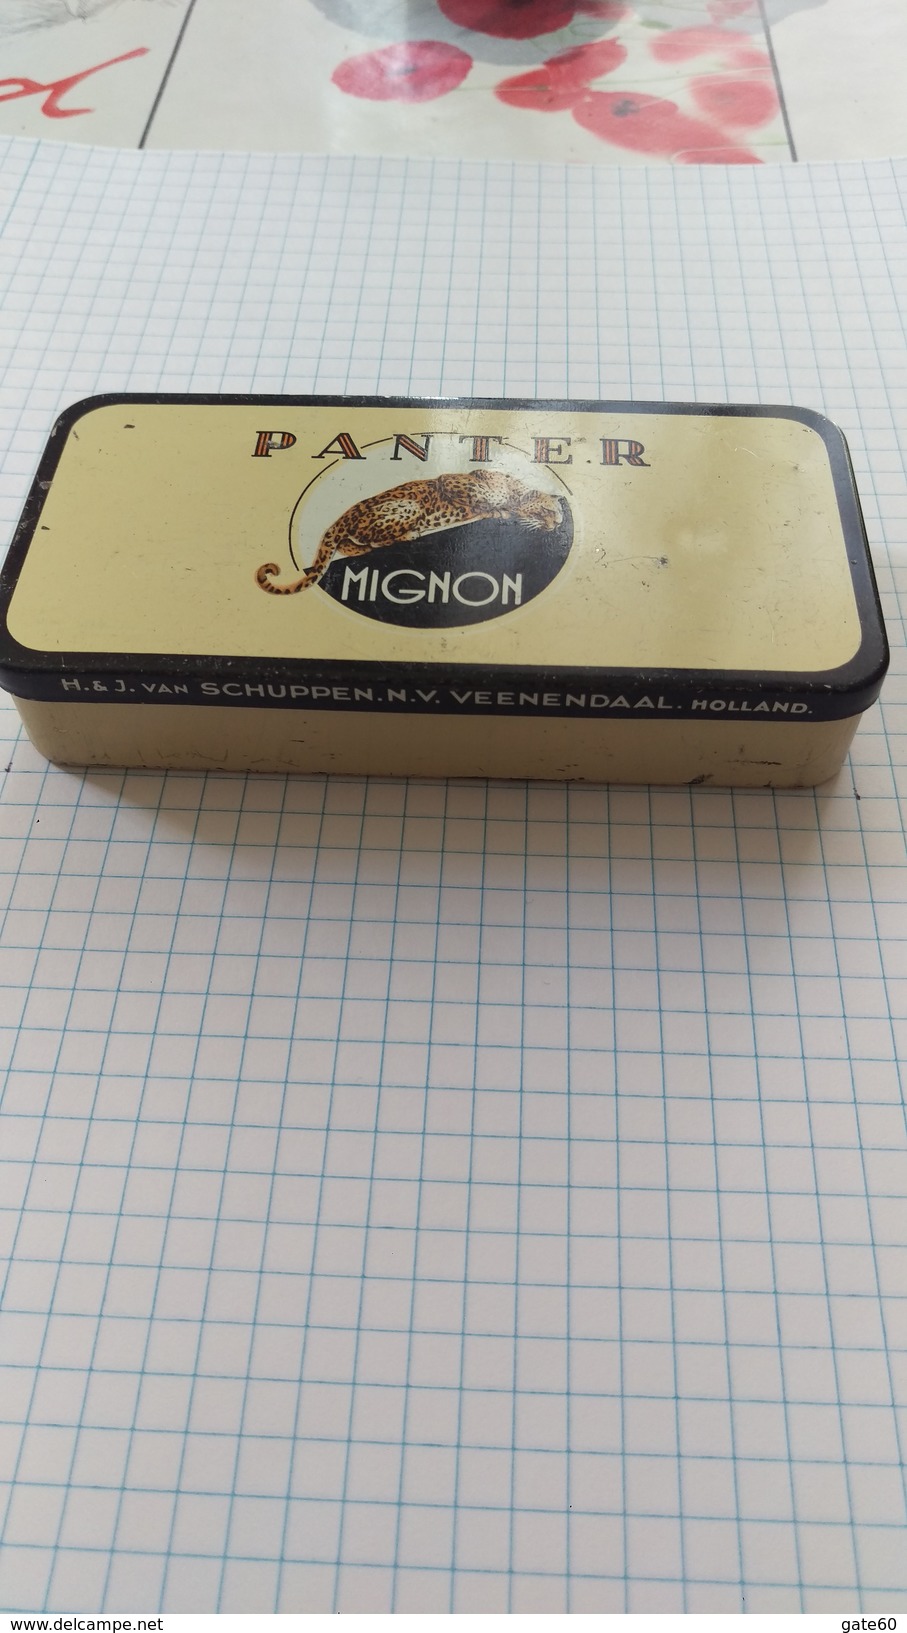 Panter Mignon Panter Sigarenfabrieken H. & J.Van Schuppen  Veenendaal - Holland - Tabaksdozen (leeg)